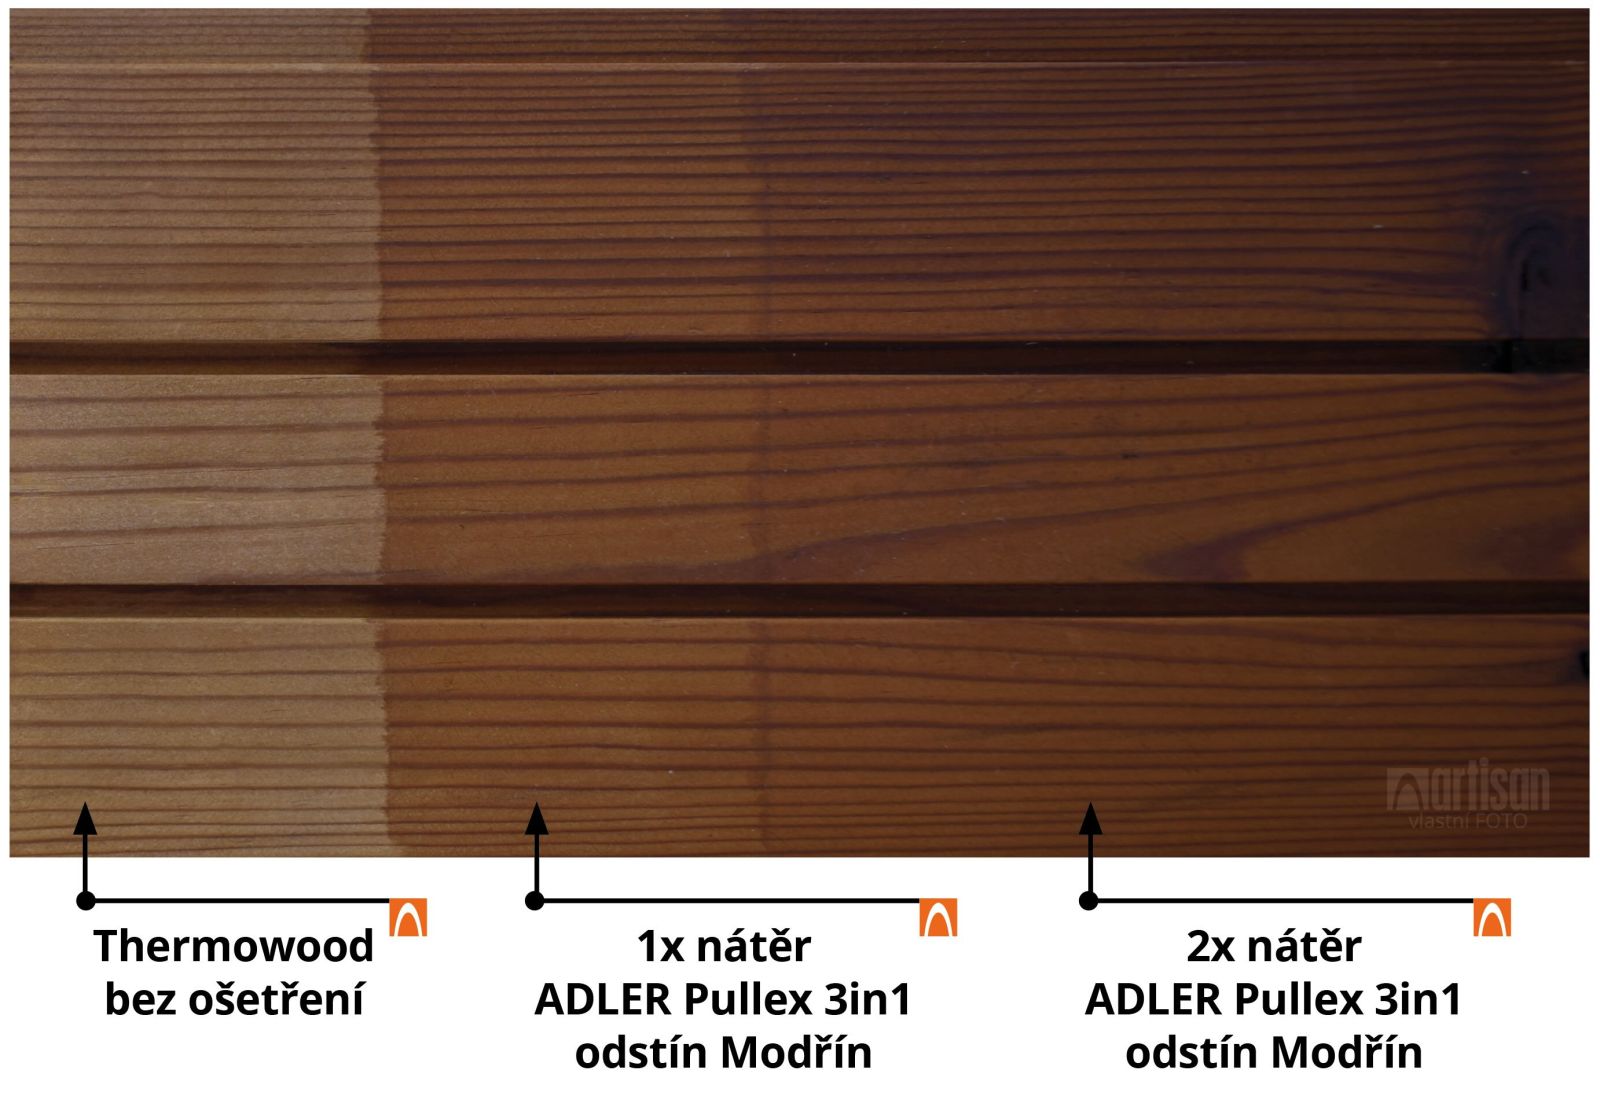 Adler Pullex 3in1 Lasur odstín modřín + dřevo Thermowood